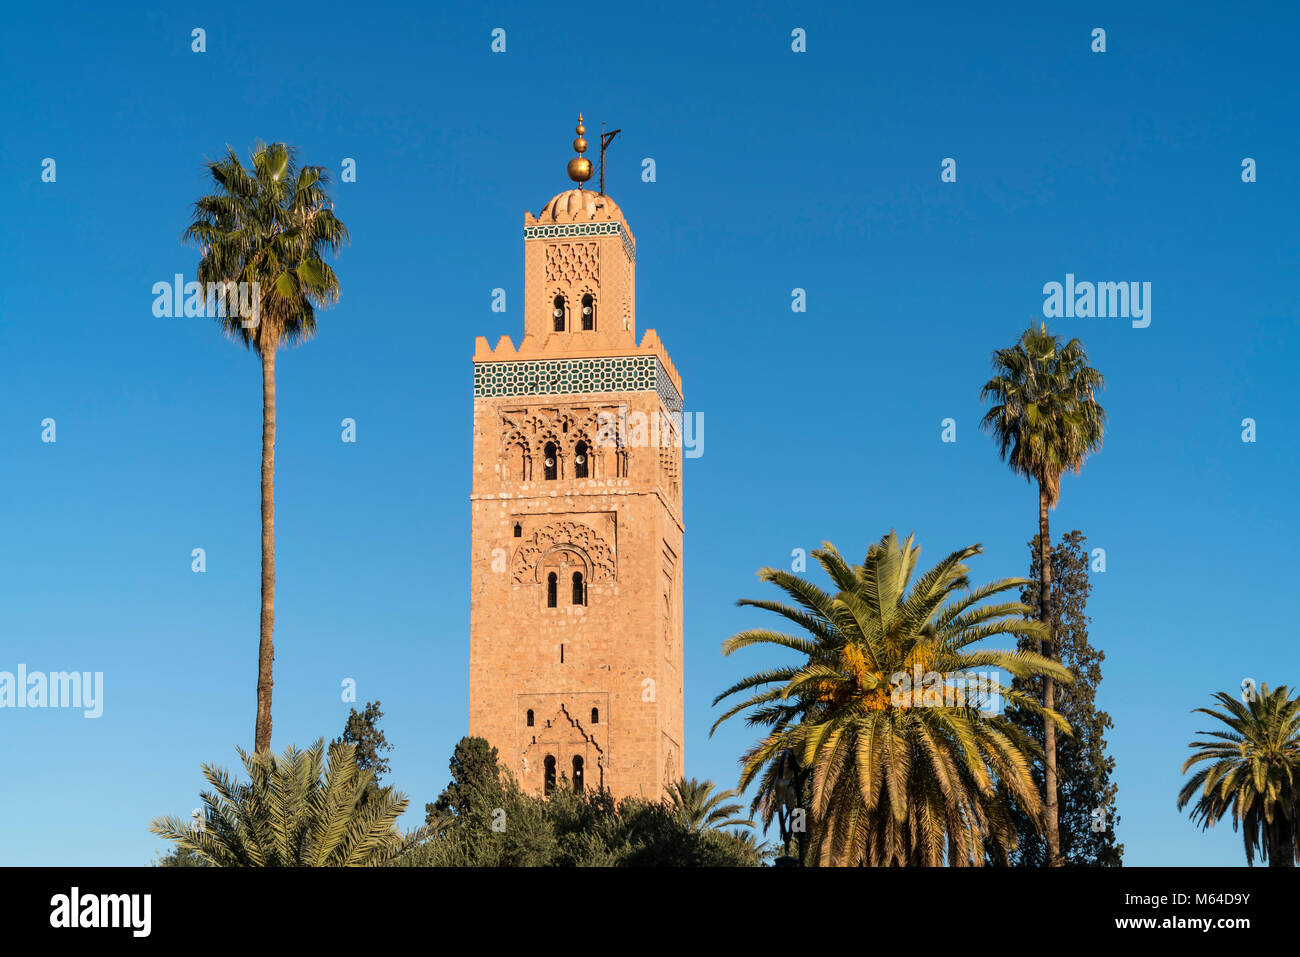 Minarett der Koutoubia-Moschee, Königreich Marokko, Afrika  |  Koutoubia Mosque minaret, Marrakesh, Kingdom of Morocco, Africa Stock Photo